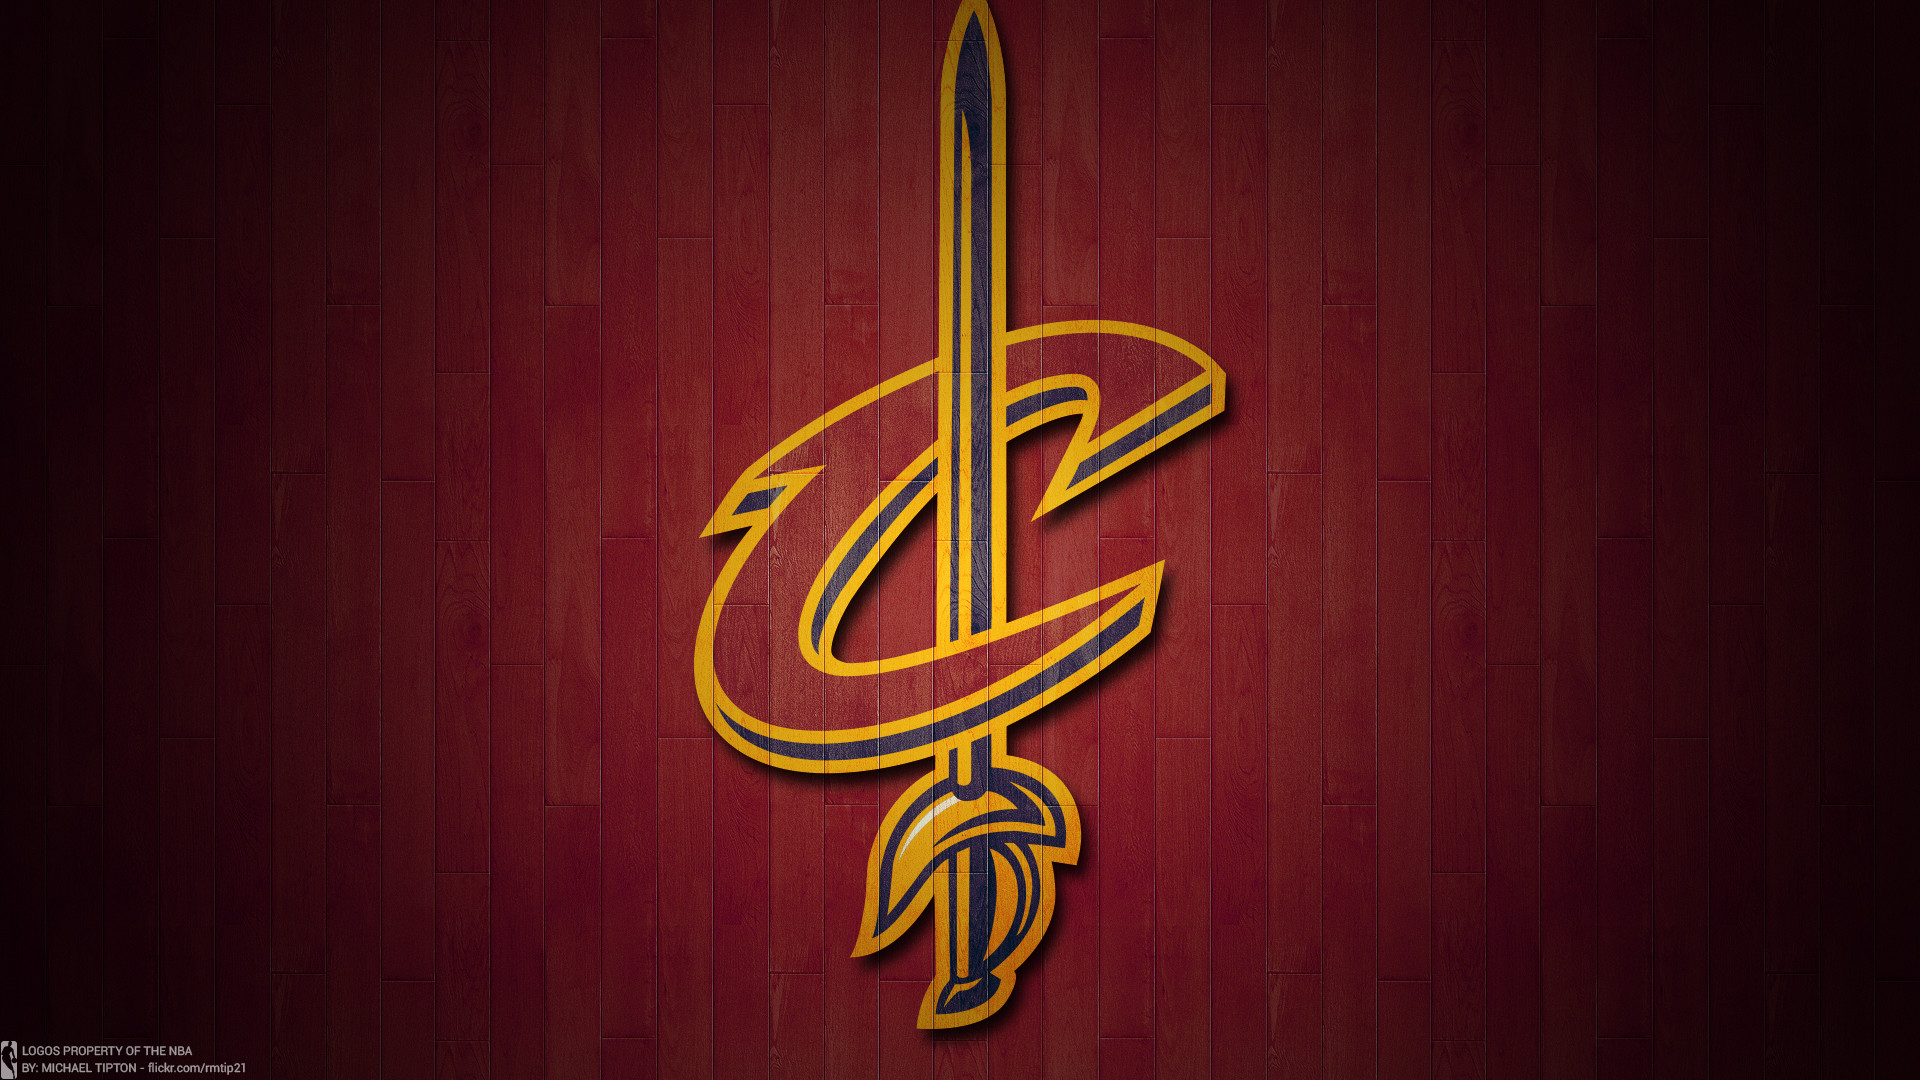 1920x1080 NBA 2017 Cleveland Cavaliers hardwood logo desktop wallpaper